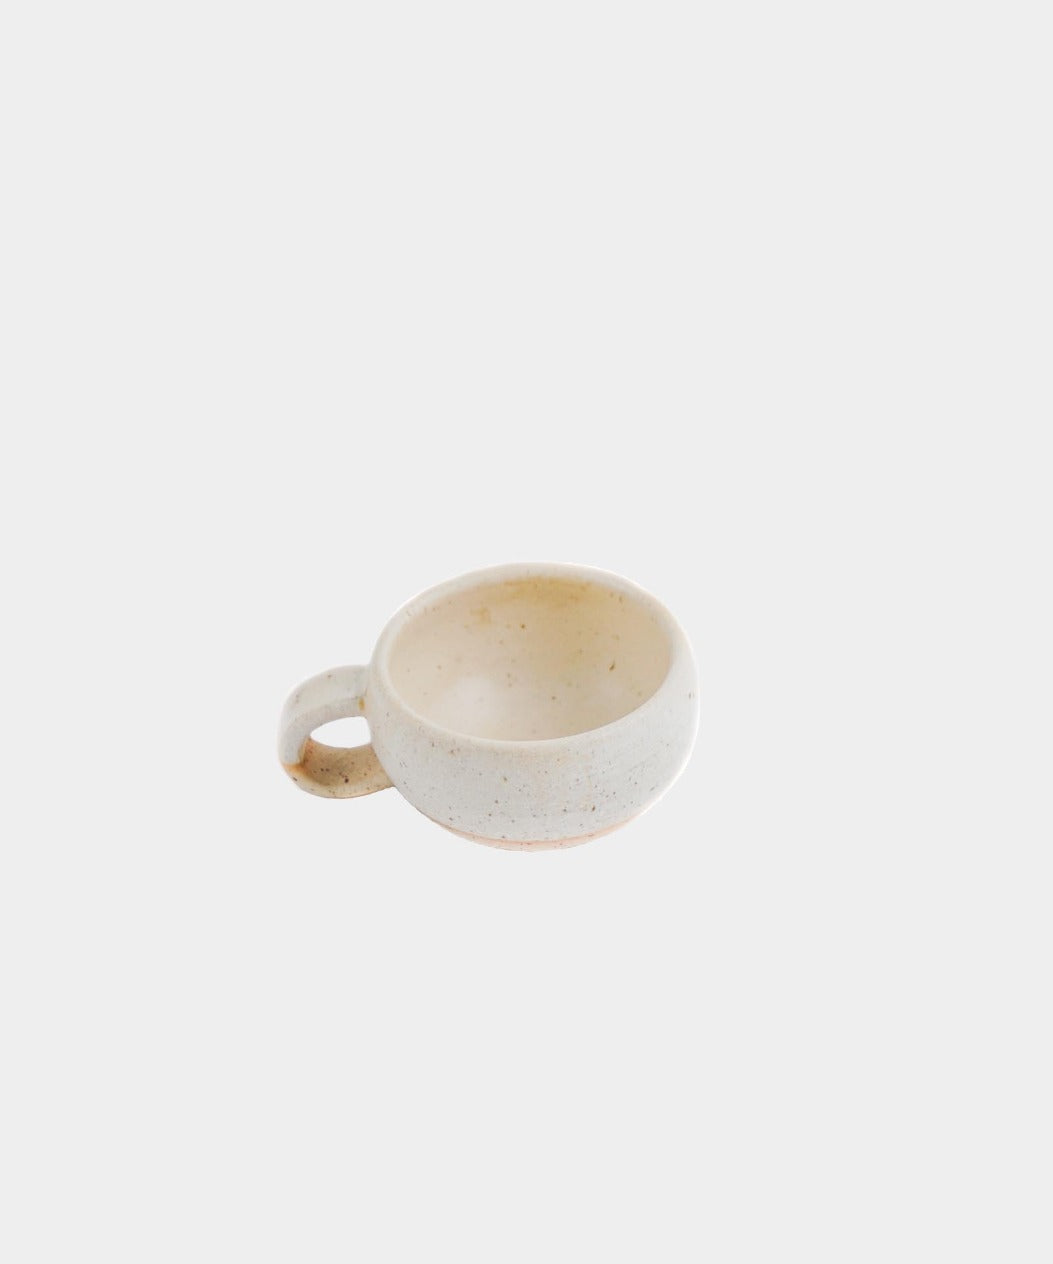 Håndlavet Keramik Espressokop | NATURAL by Vang | Kerama 2